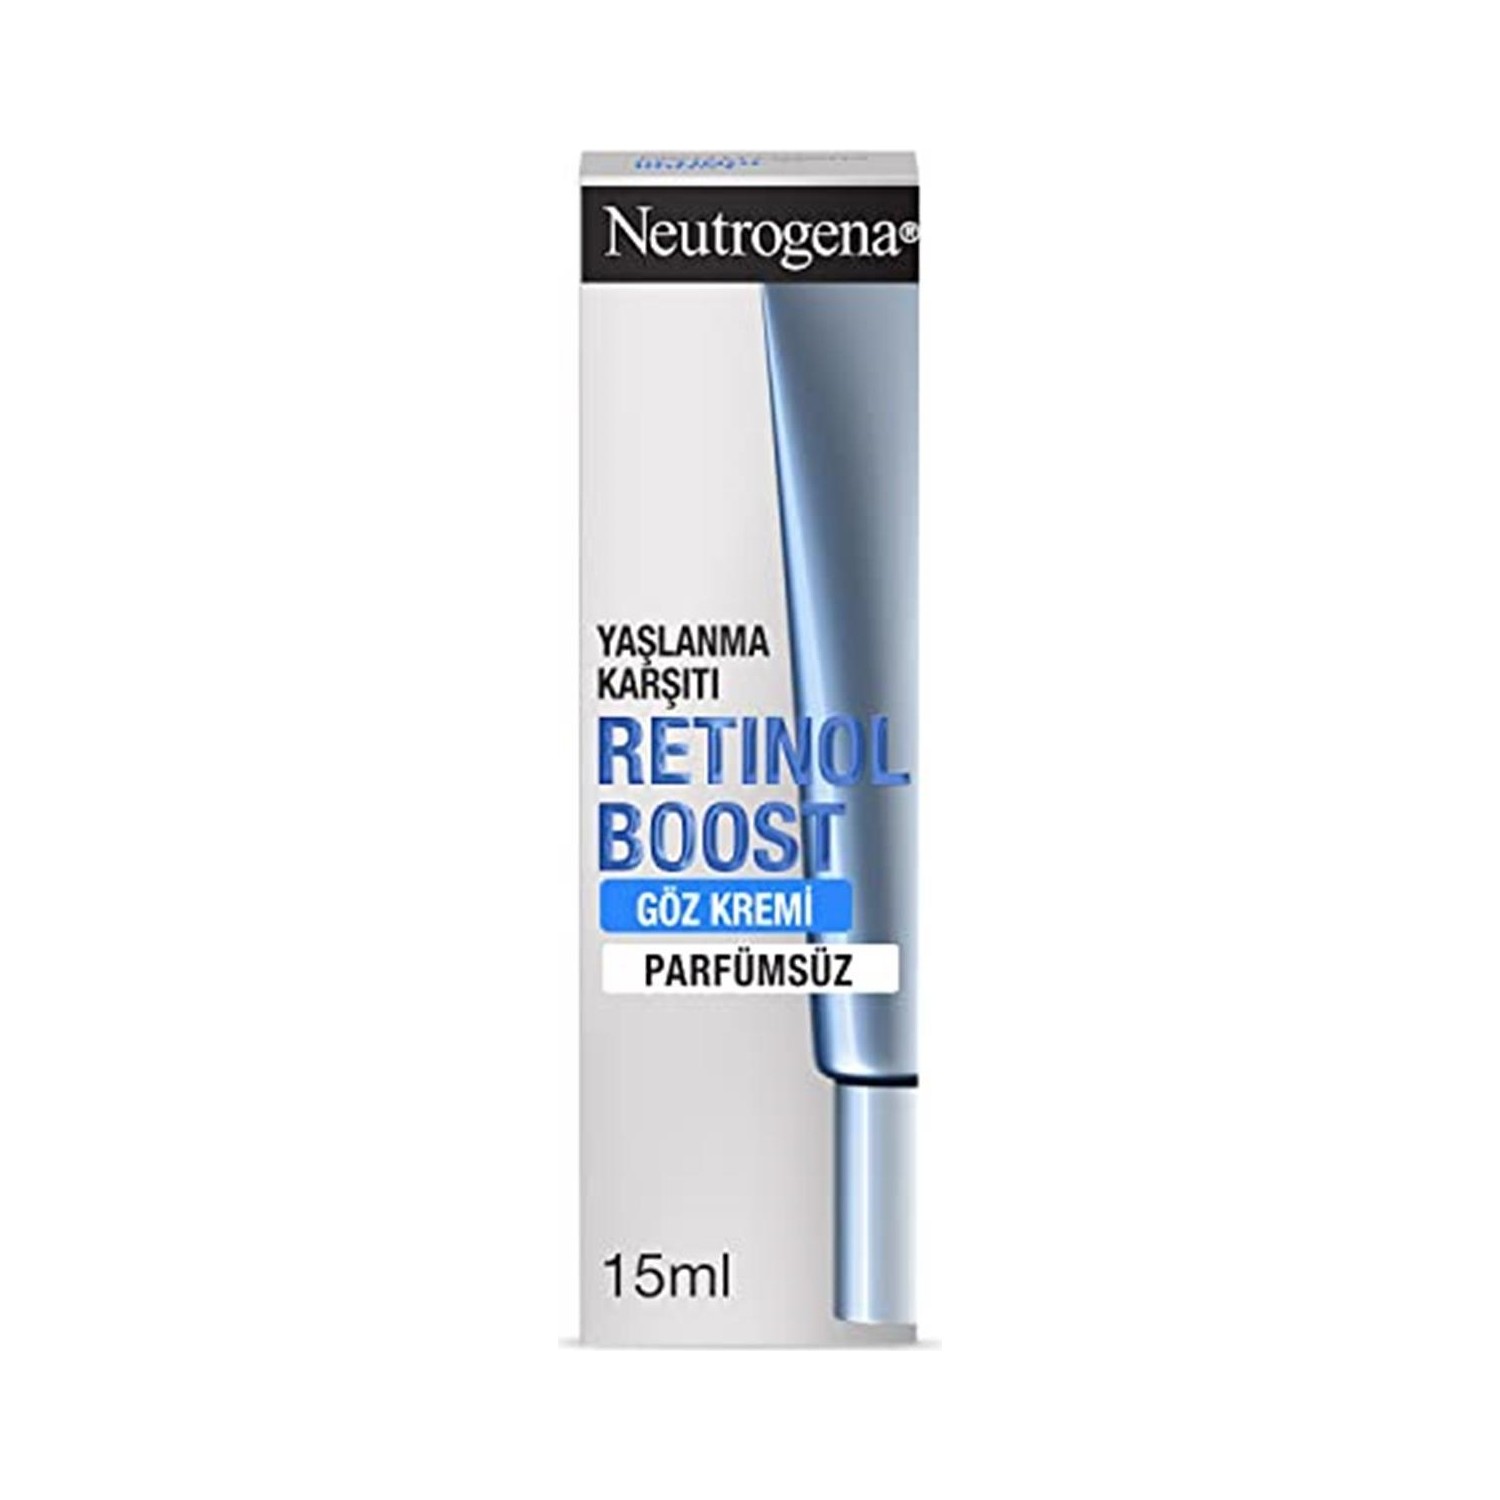 Крем для кожи вокруг глаз Neutrogena Retinol Boost, 15 мл крем для кожи вокруг глаз neutrogena danisman retinol boost 15 мл